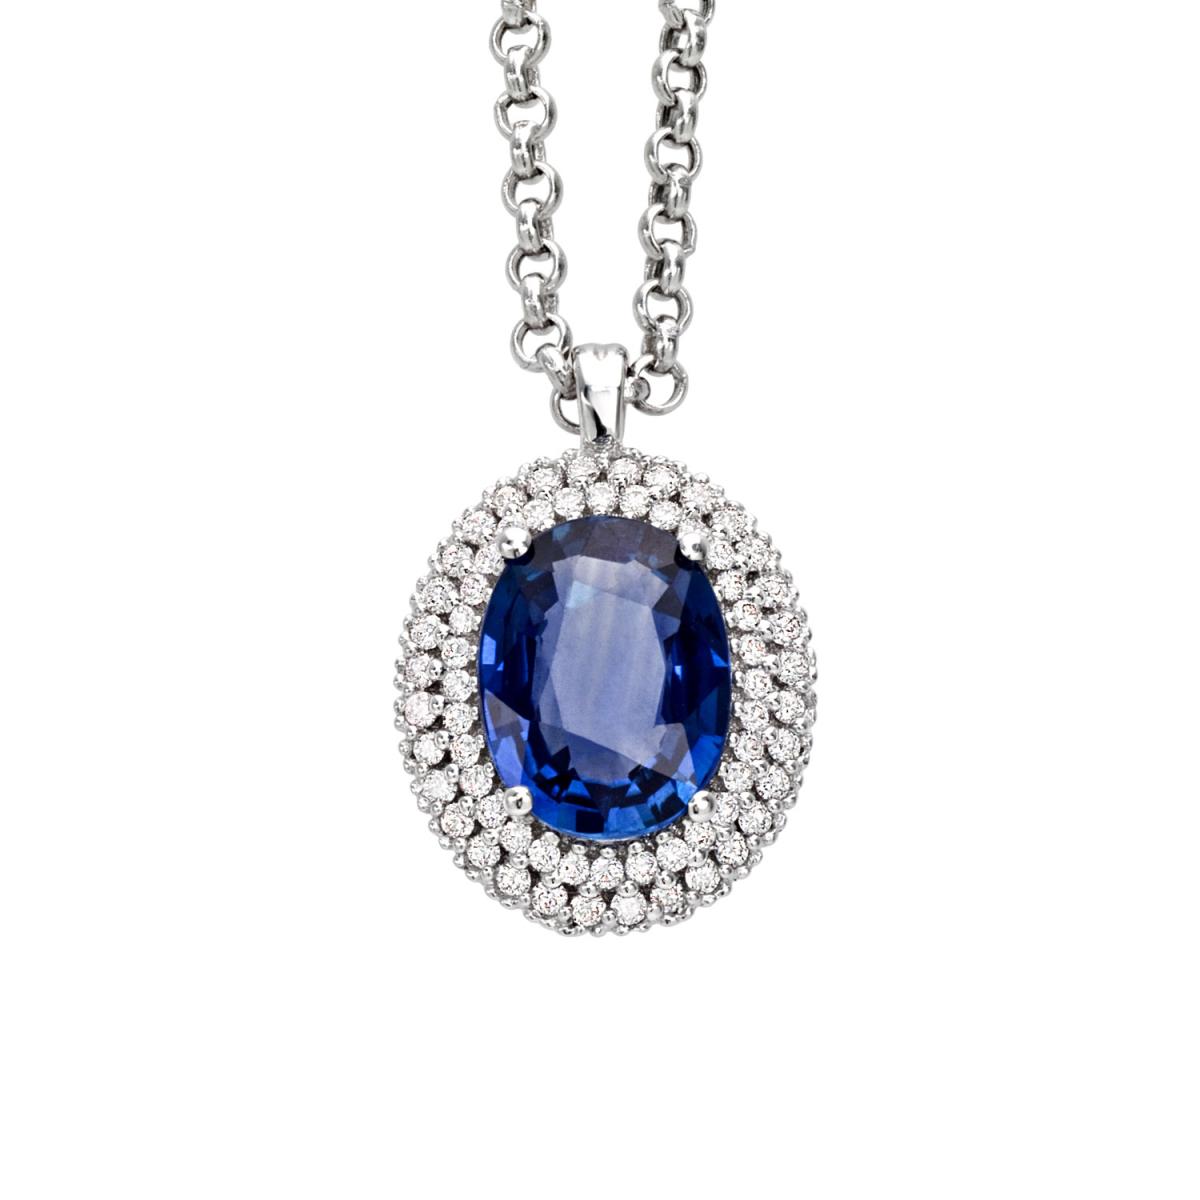 Necklace with Diamonds and Precious Stone